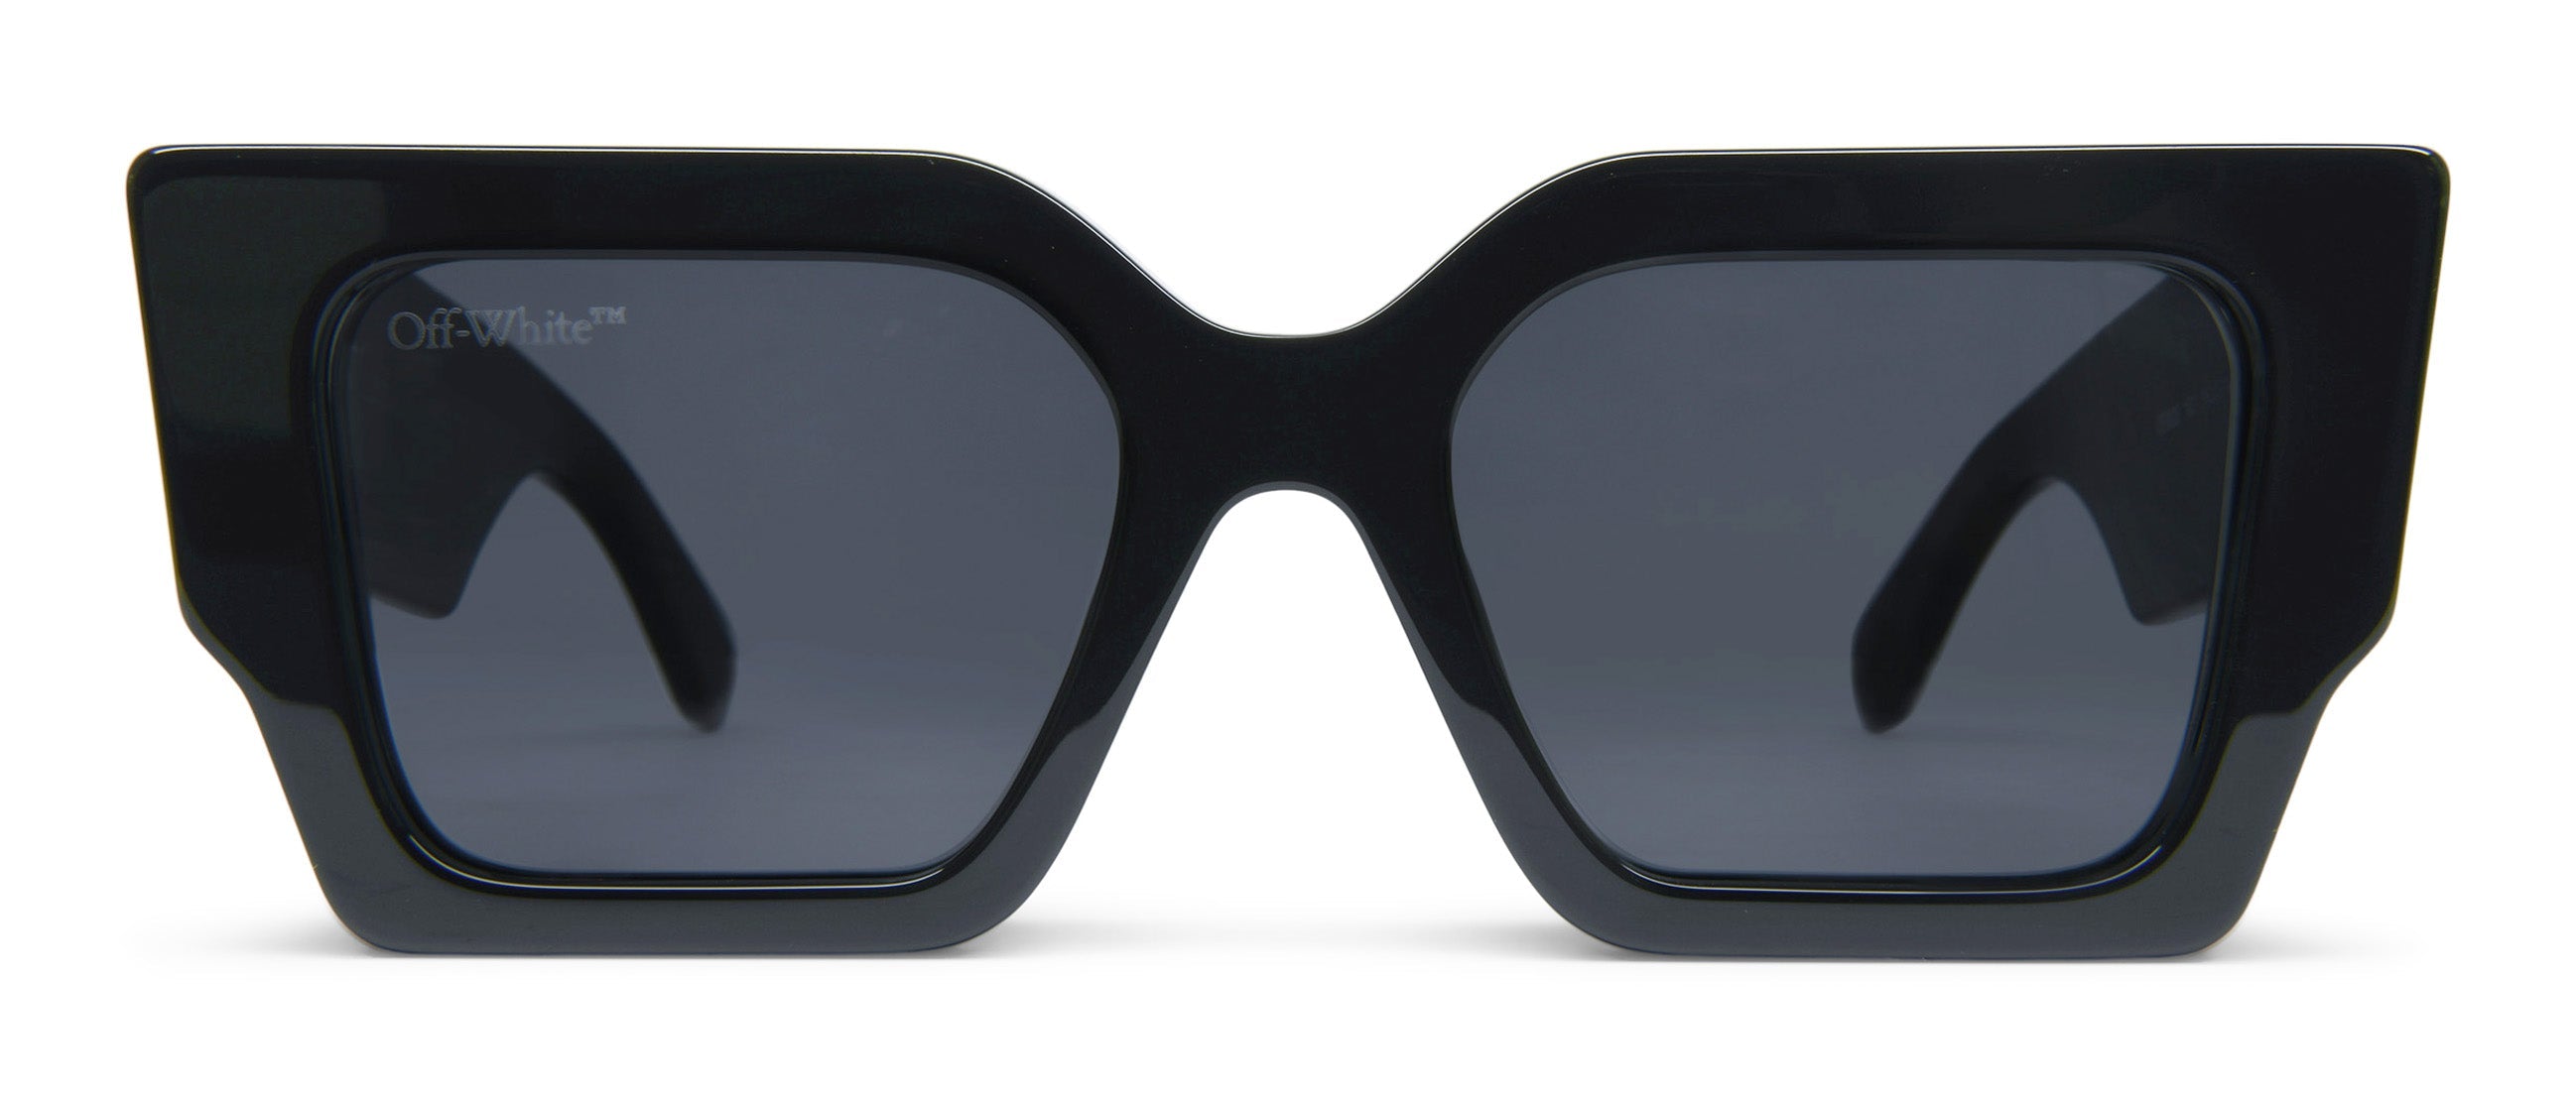 Off White CATALINA sunglasses fuchsia rectangular